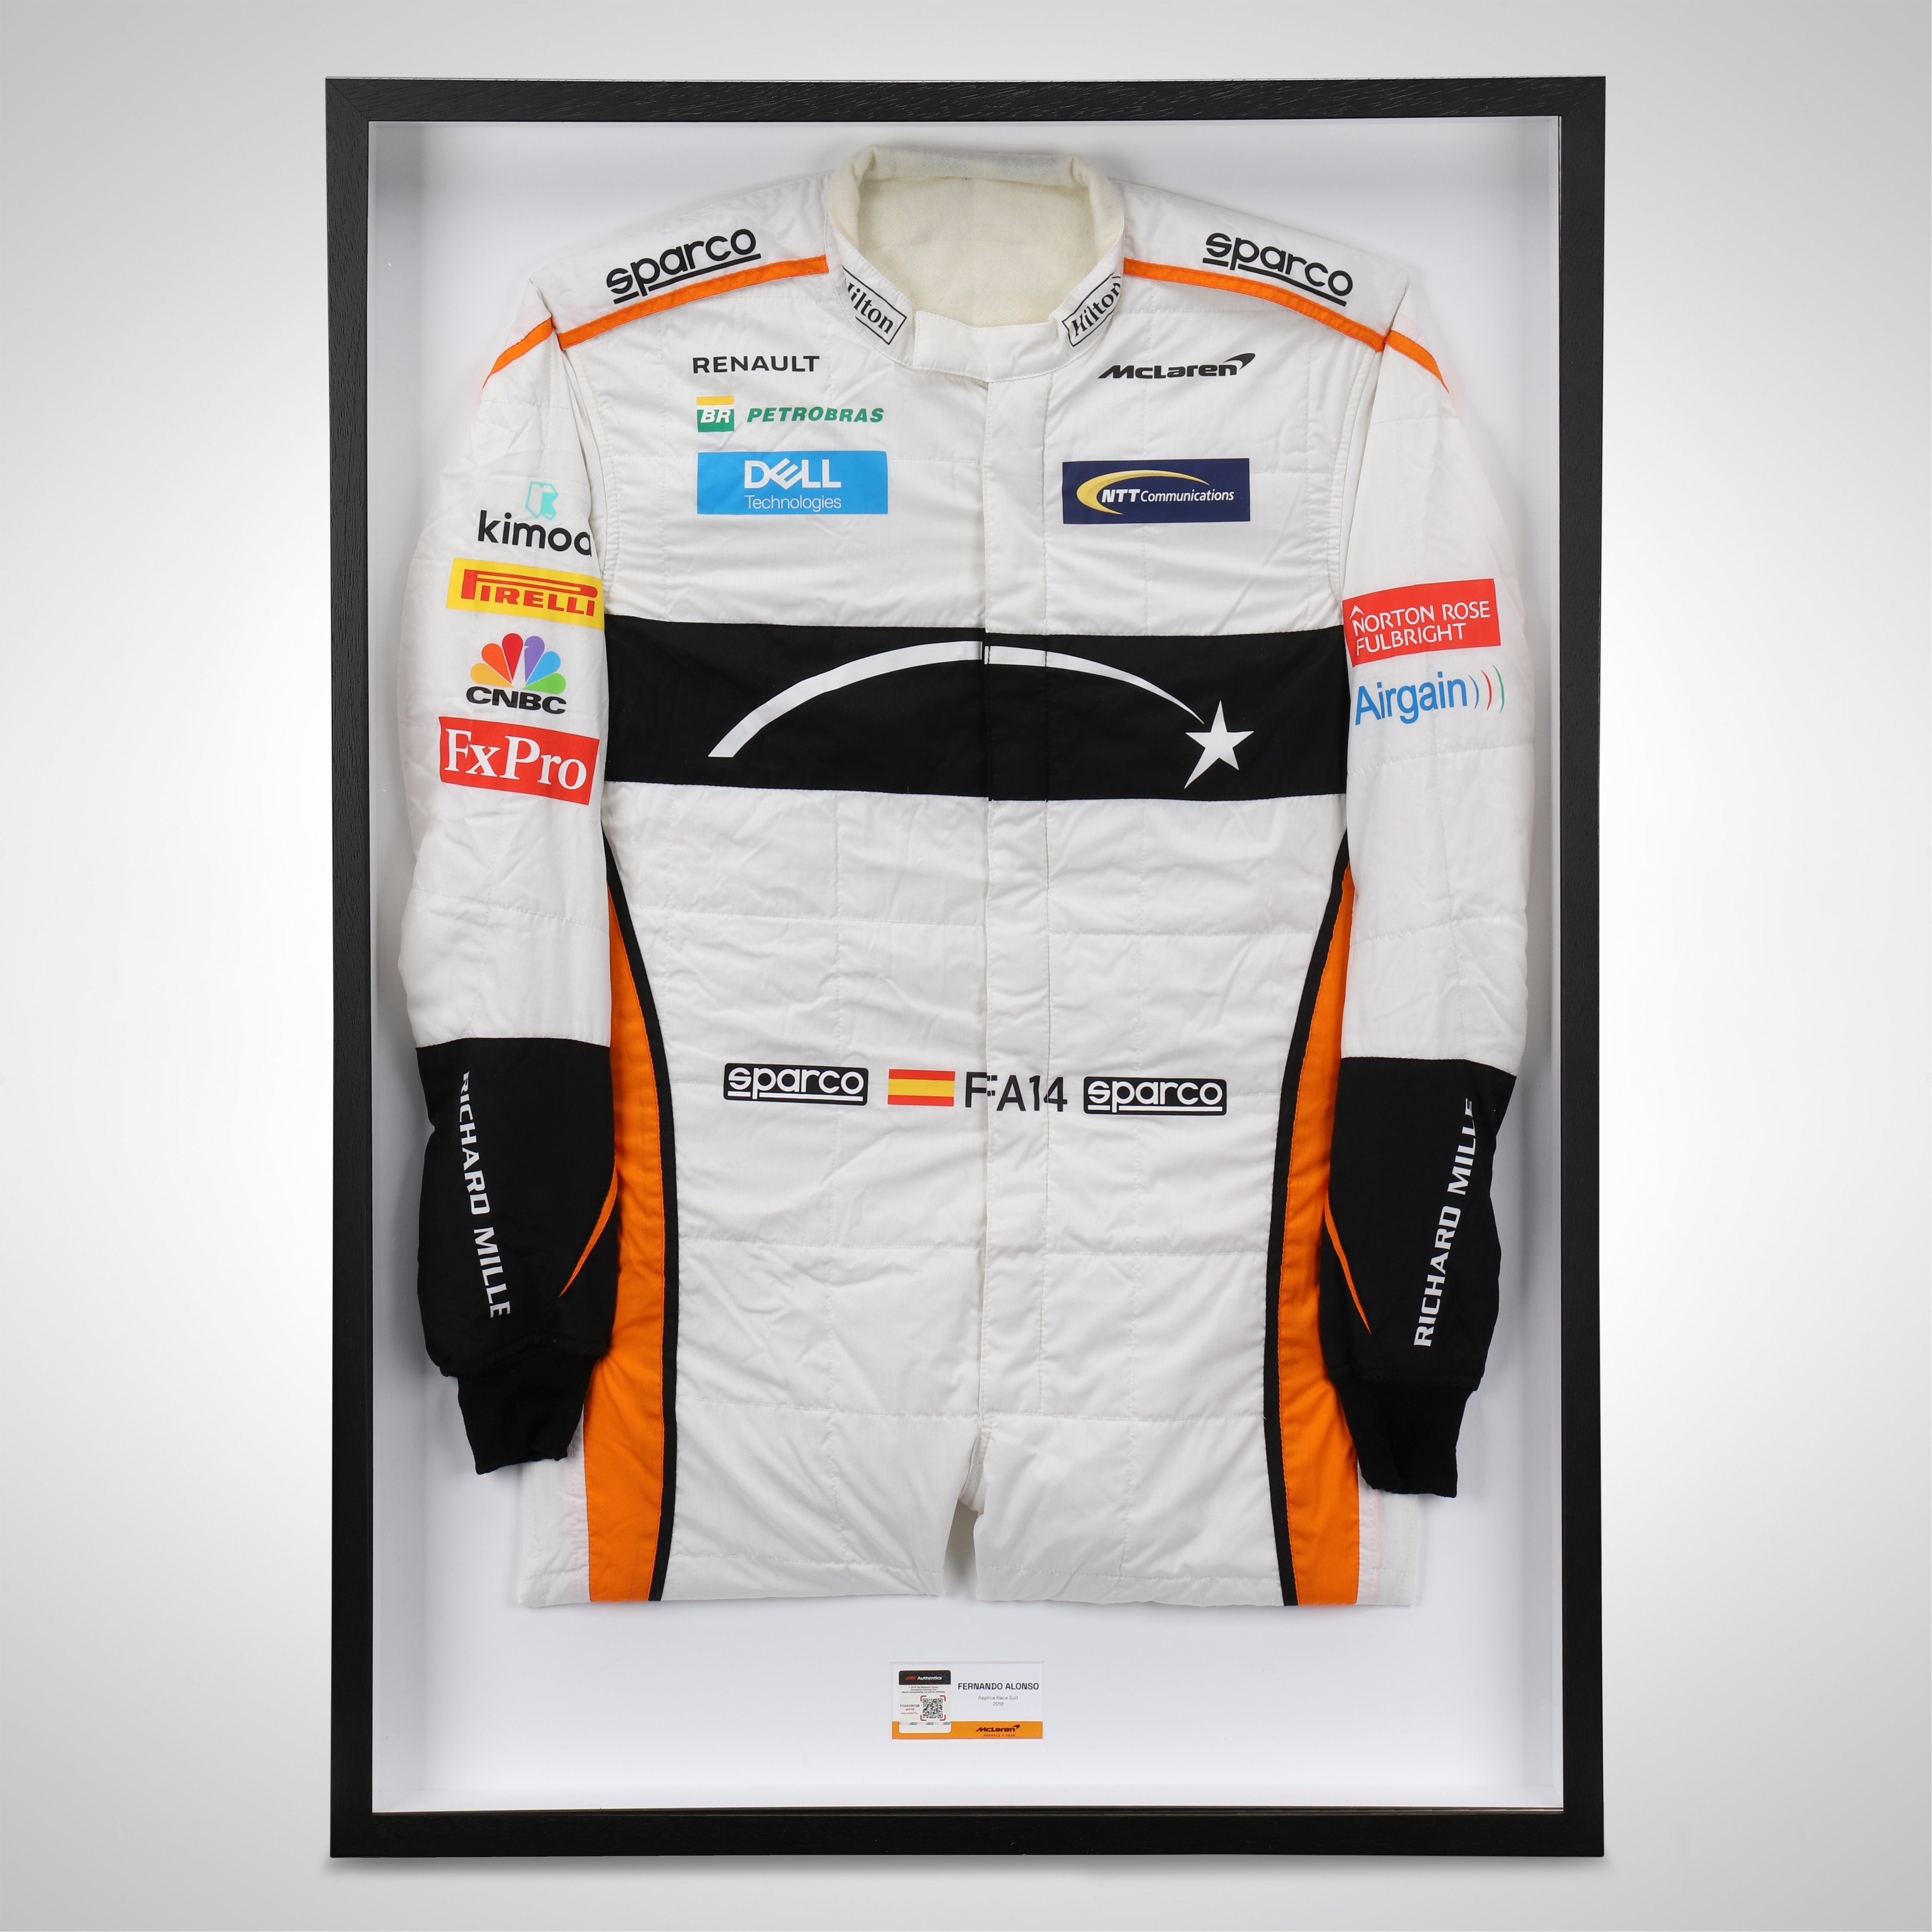 Fernando Alonso 2018 Replica McLaren F1 Team Race Suit with Chandon Star Branding